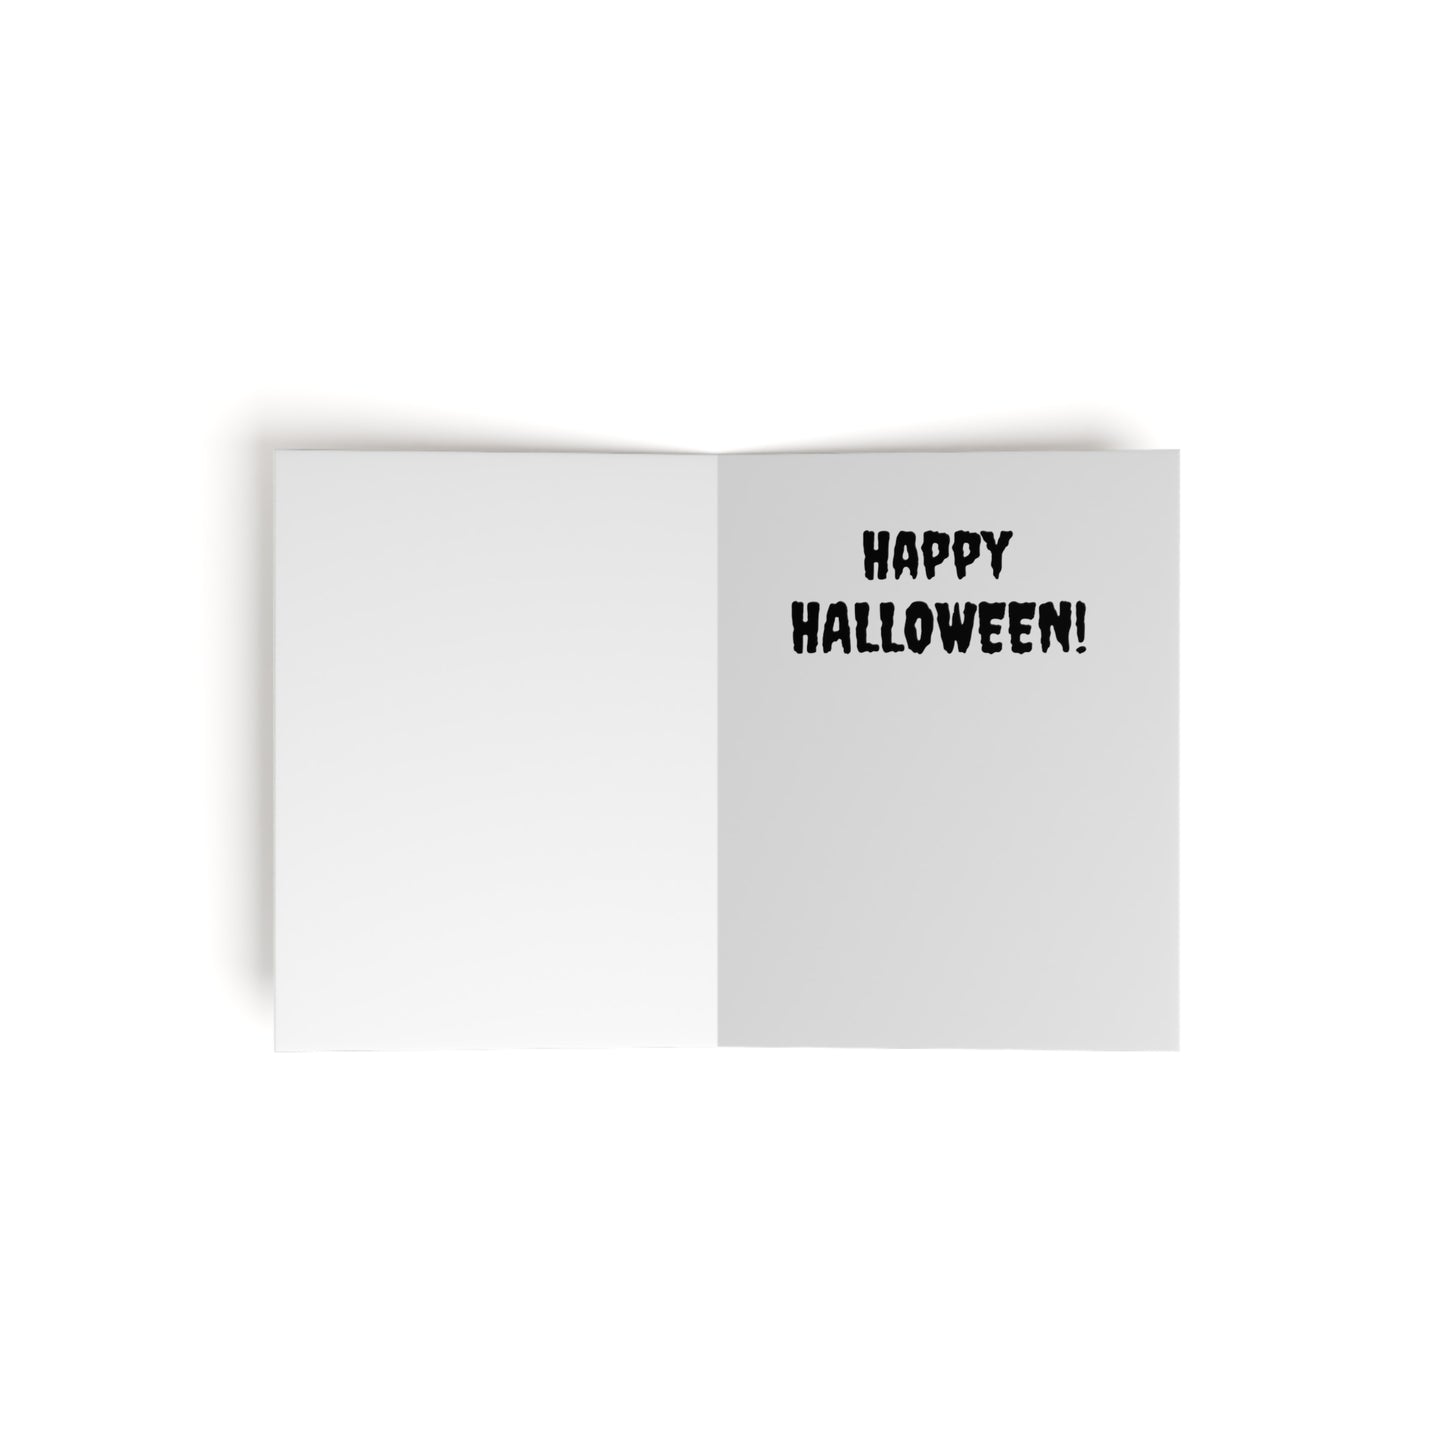 Halloween Greeting Cards - Green Daisy (8 pcs)